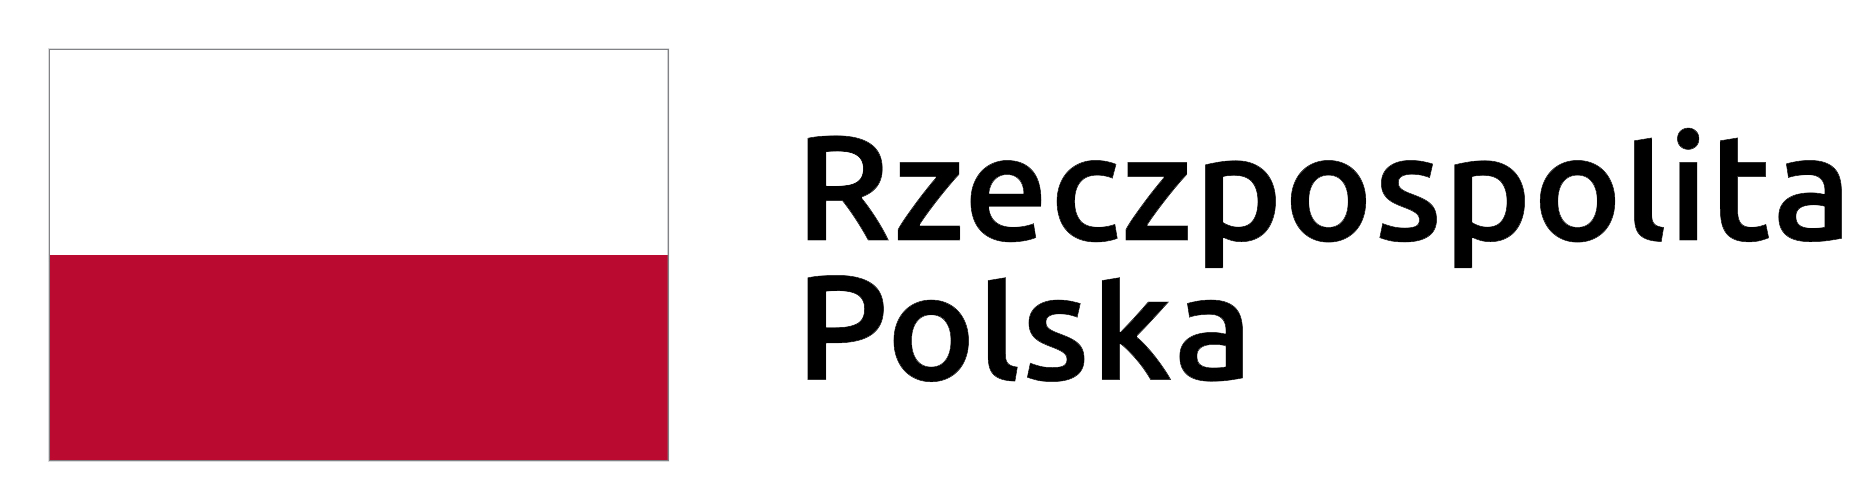 logo rzeczpospolita